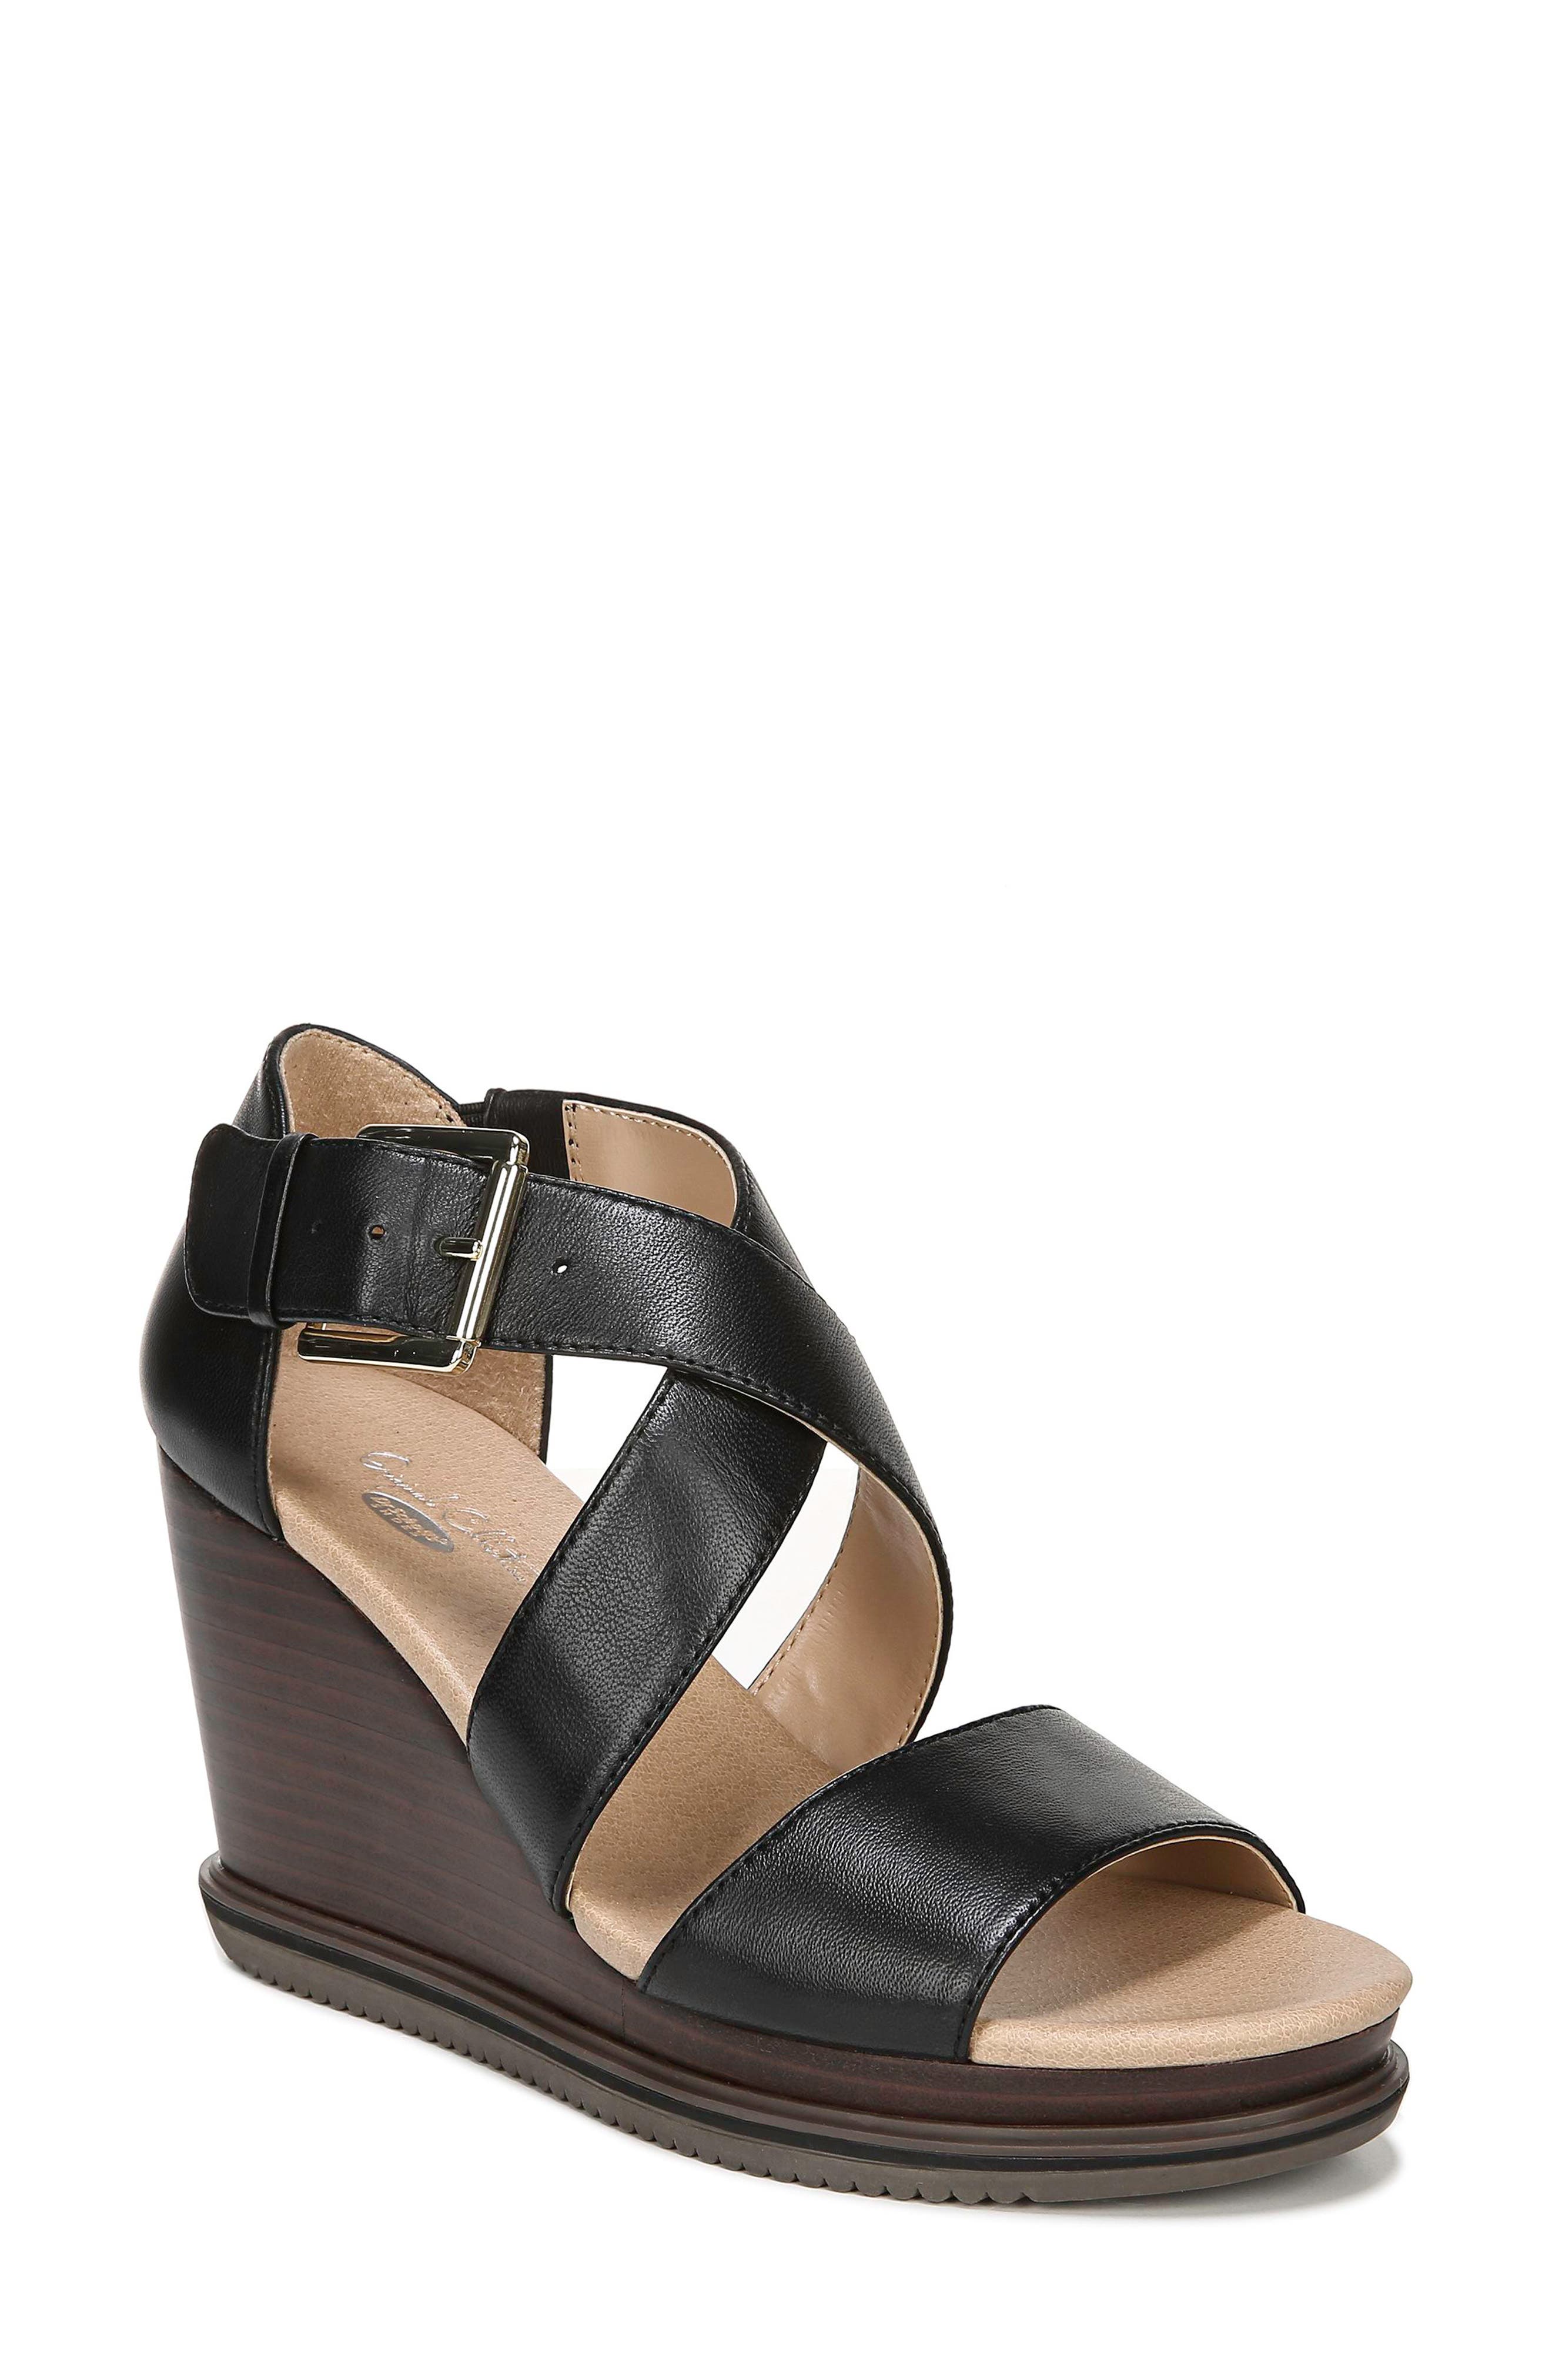 UPC 742976000102 product image for Women's Dr. Scholl's Sweet Escape Wedge Sandal, Size 9 M - Black | upcitemdb.com